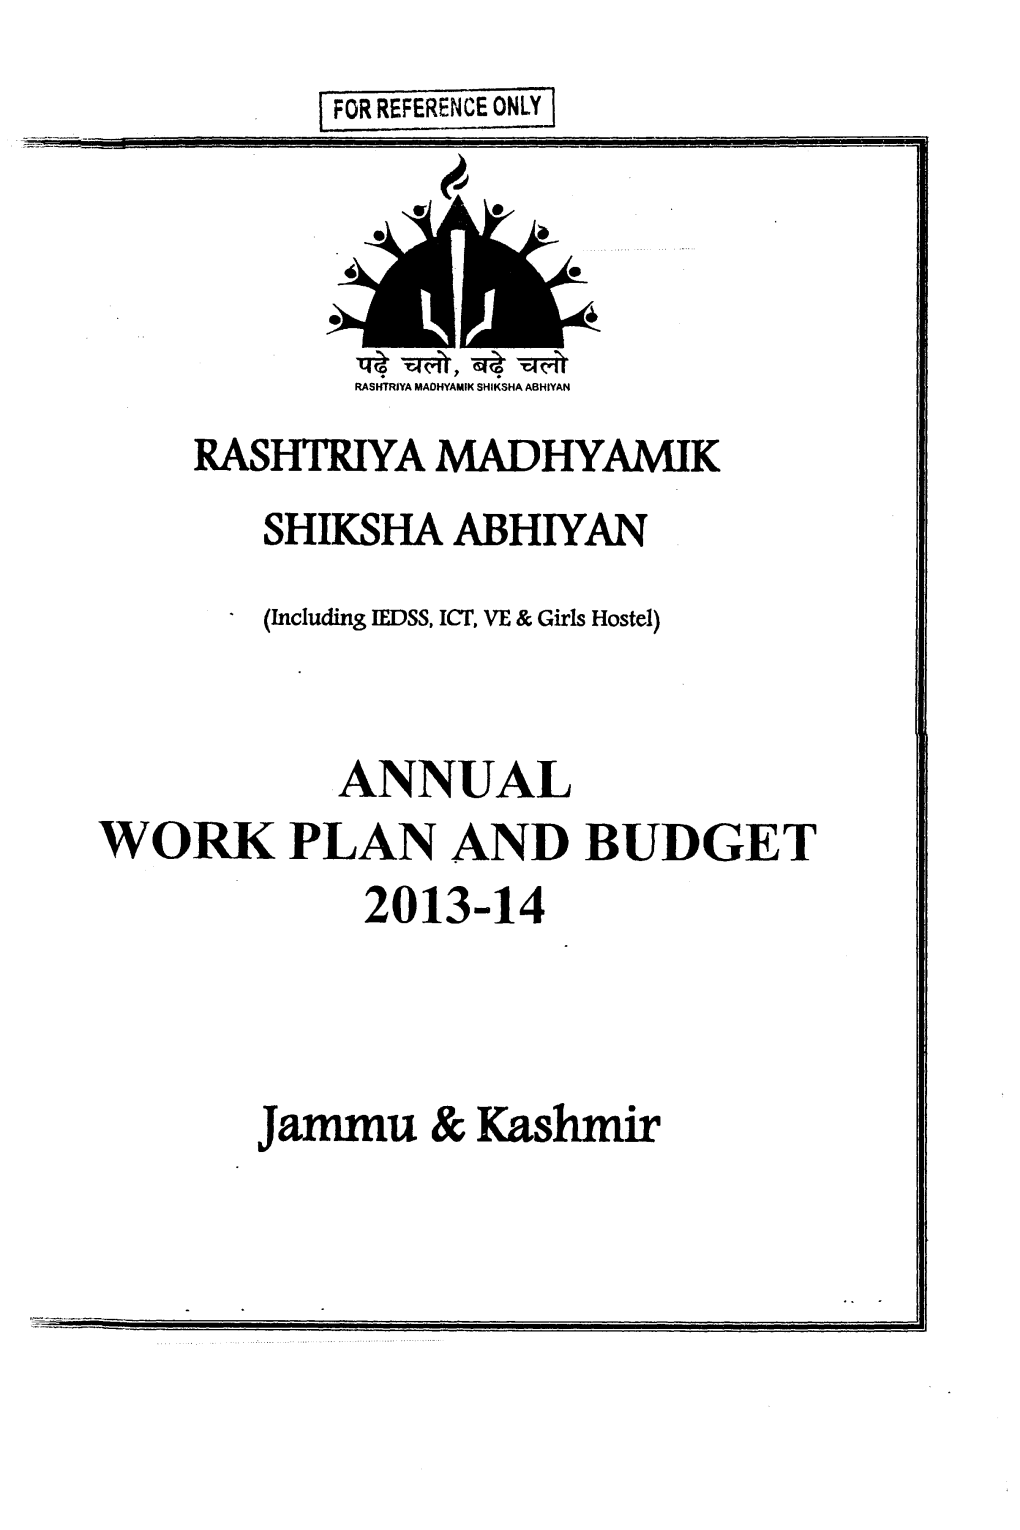 ANNUAL WORK PLAN and BUDGET Jammu & Kashmir